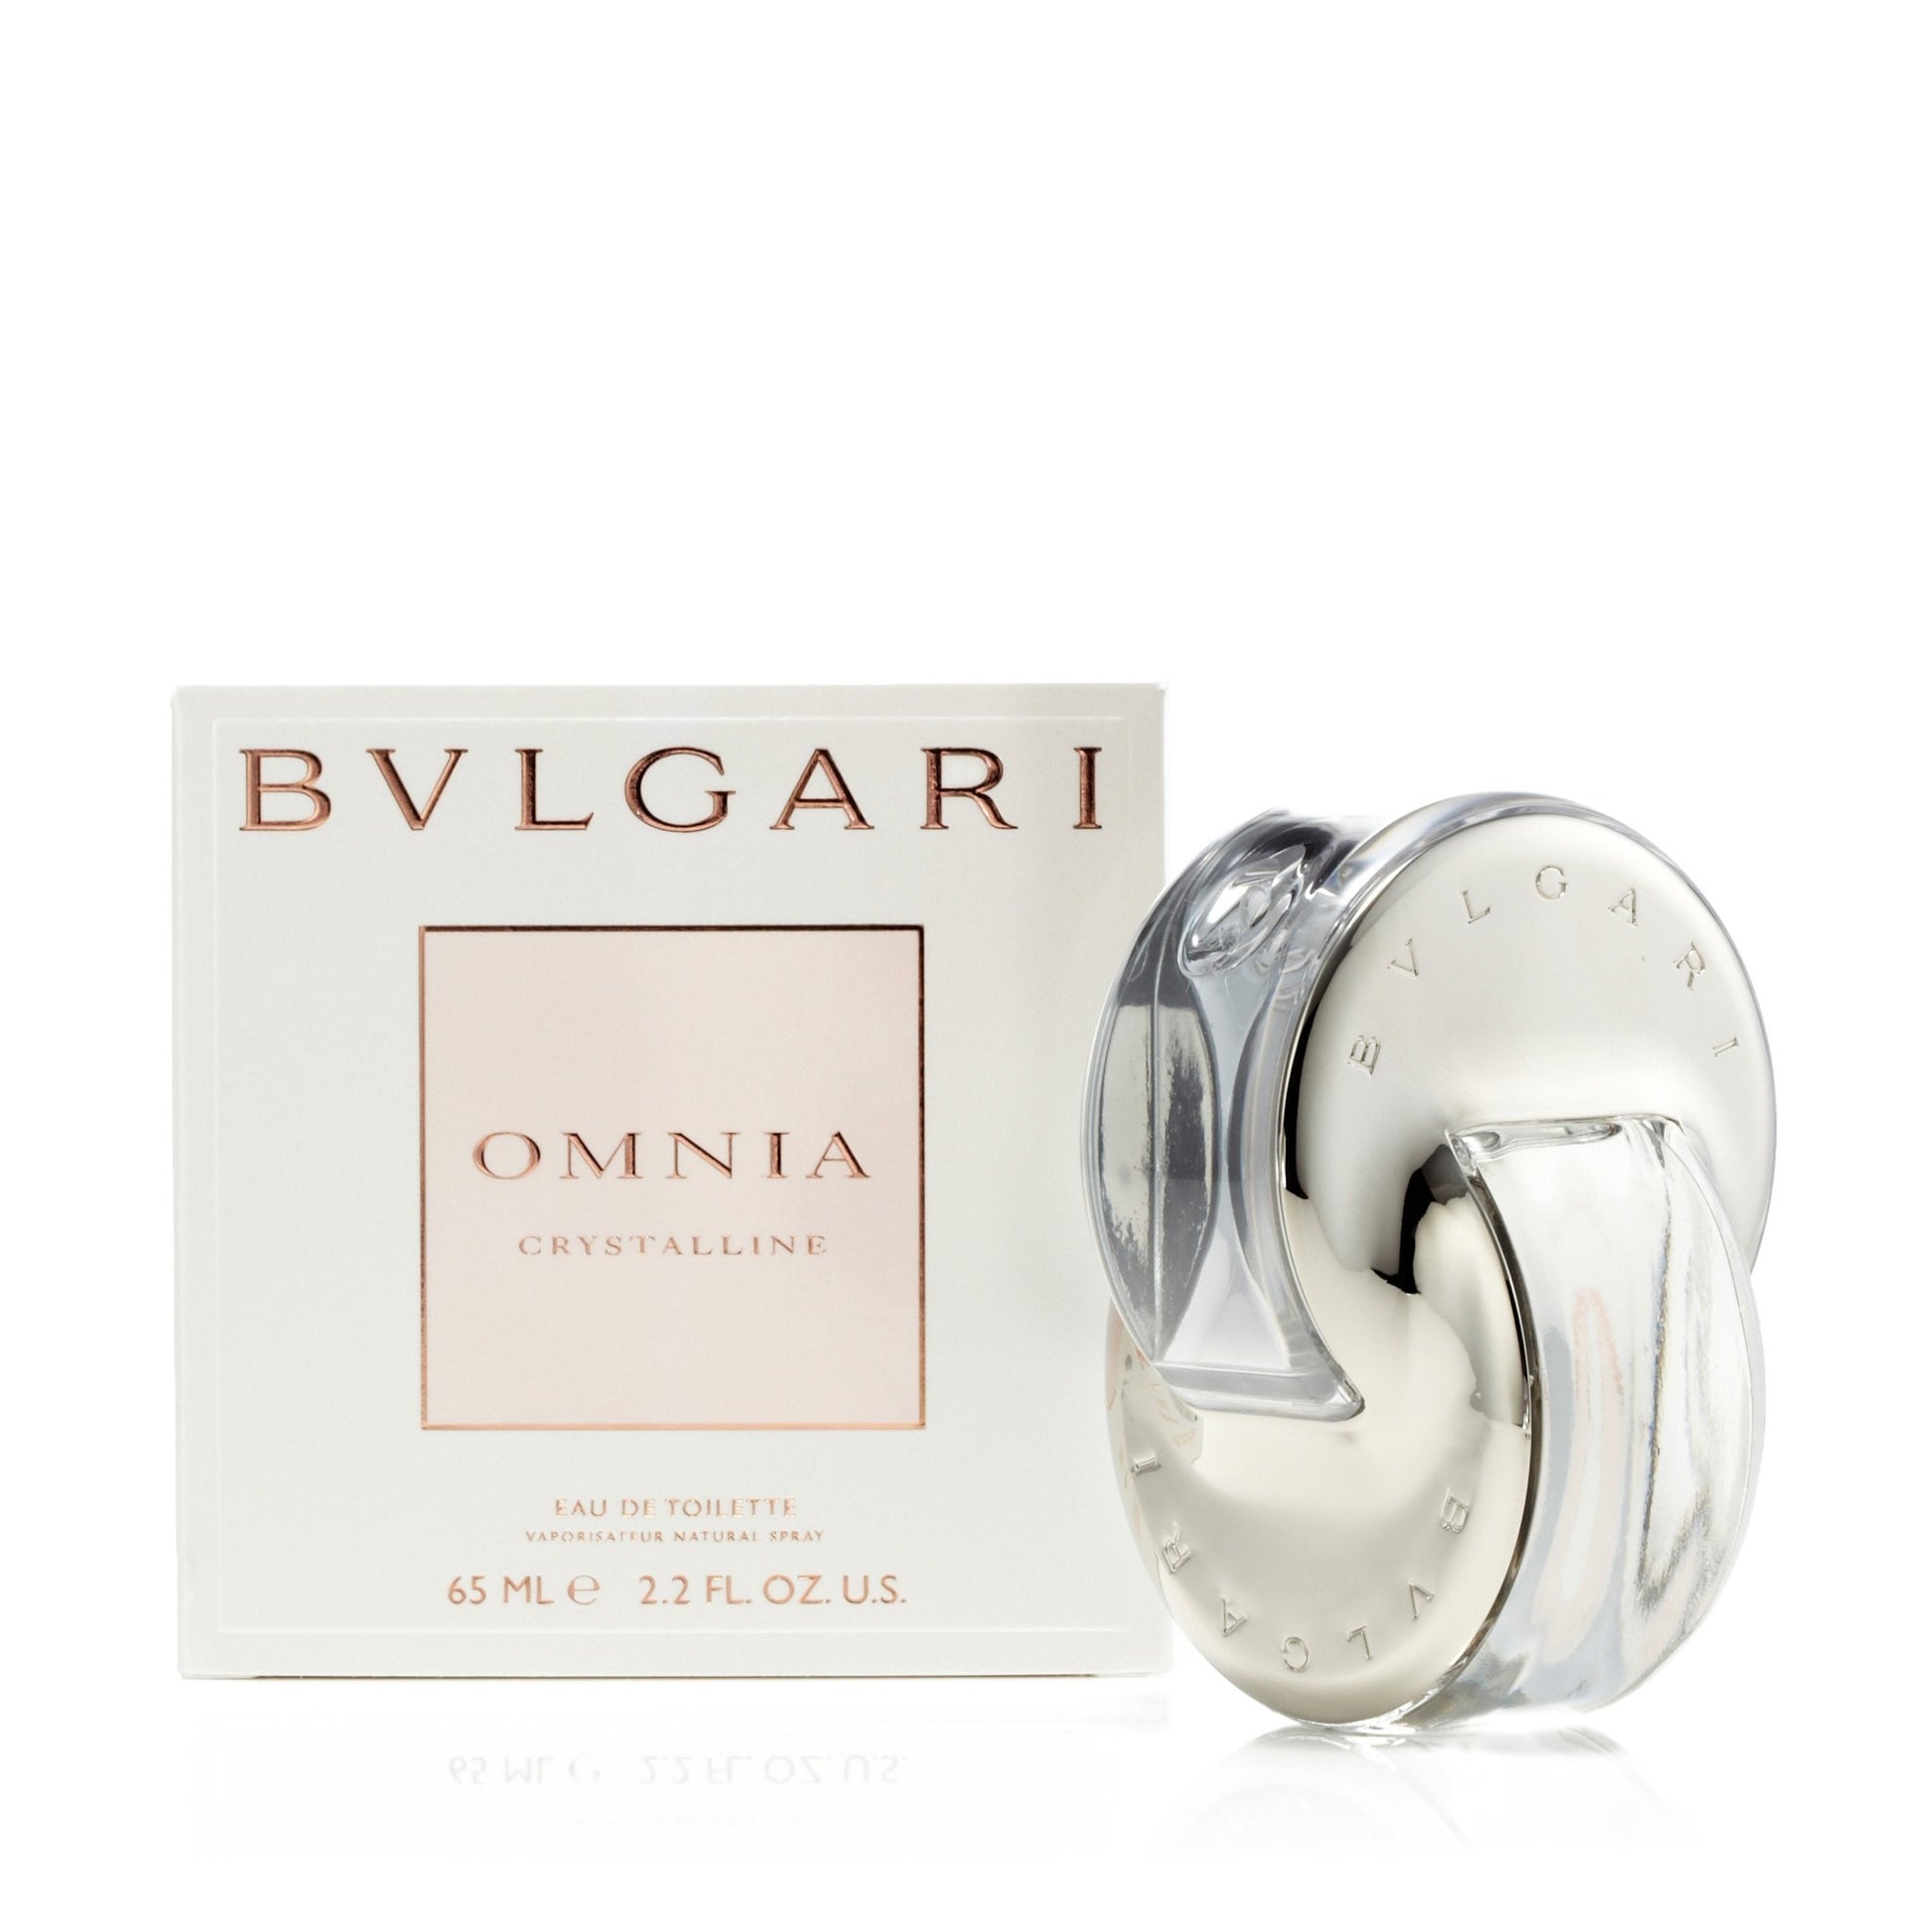 Omnia Crystalline Eau de Toilette Spray for Women by Bvlgari 2.2 oz. Click to open in modal